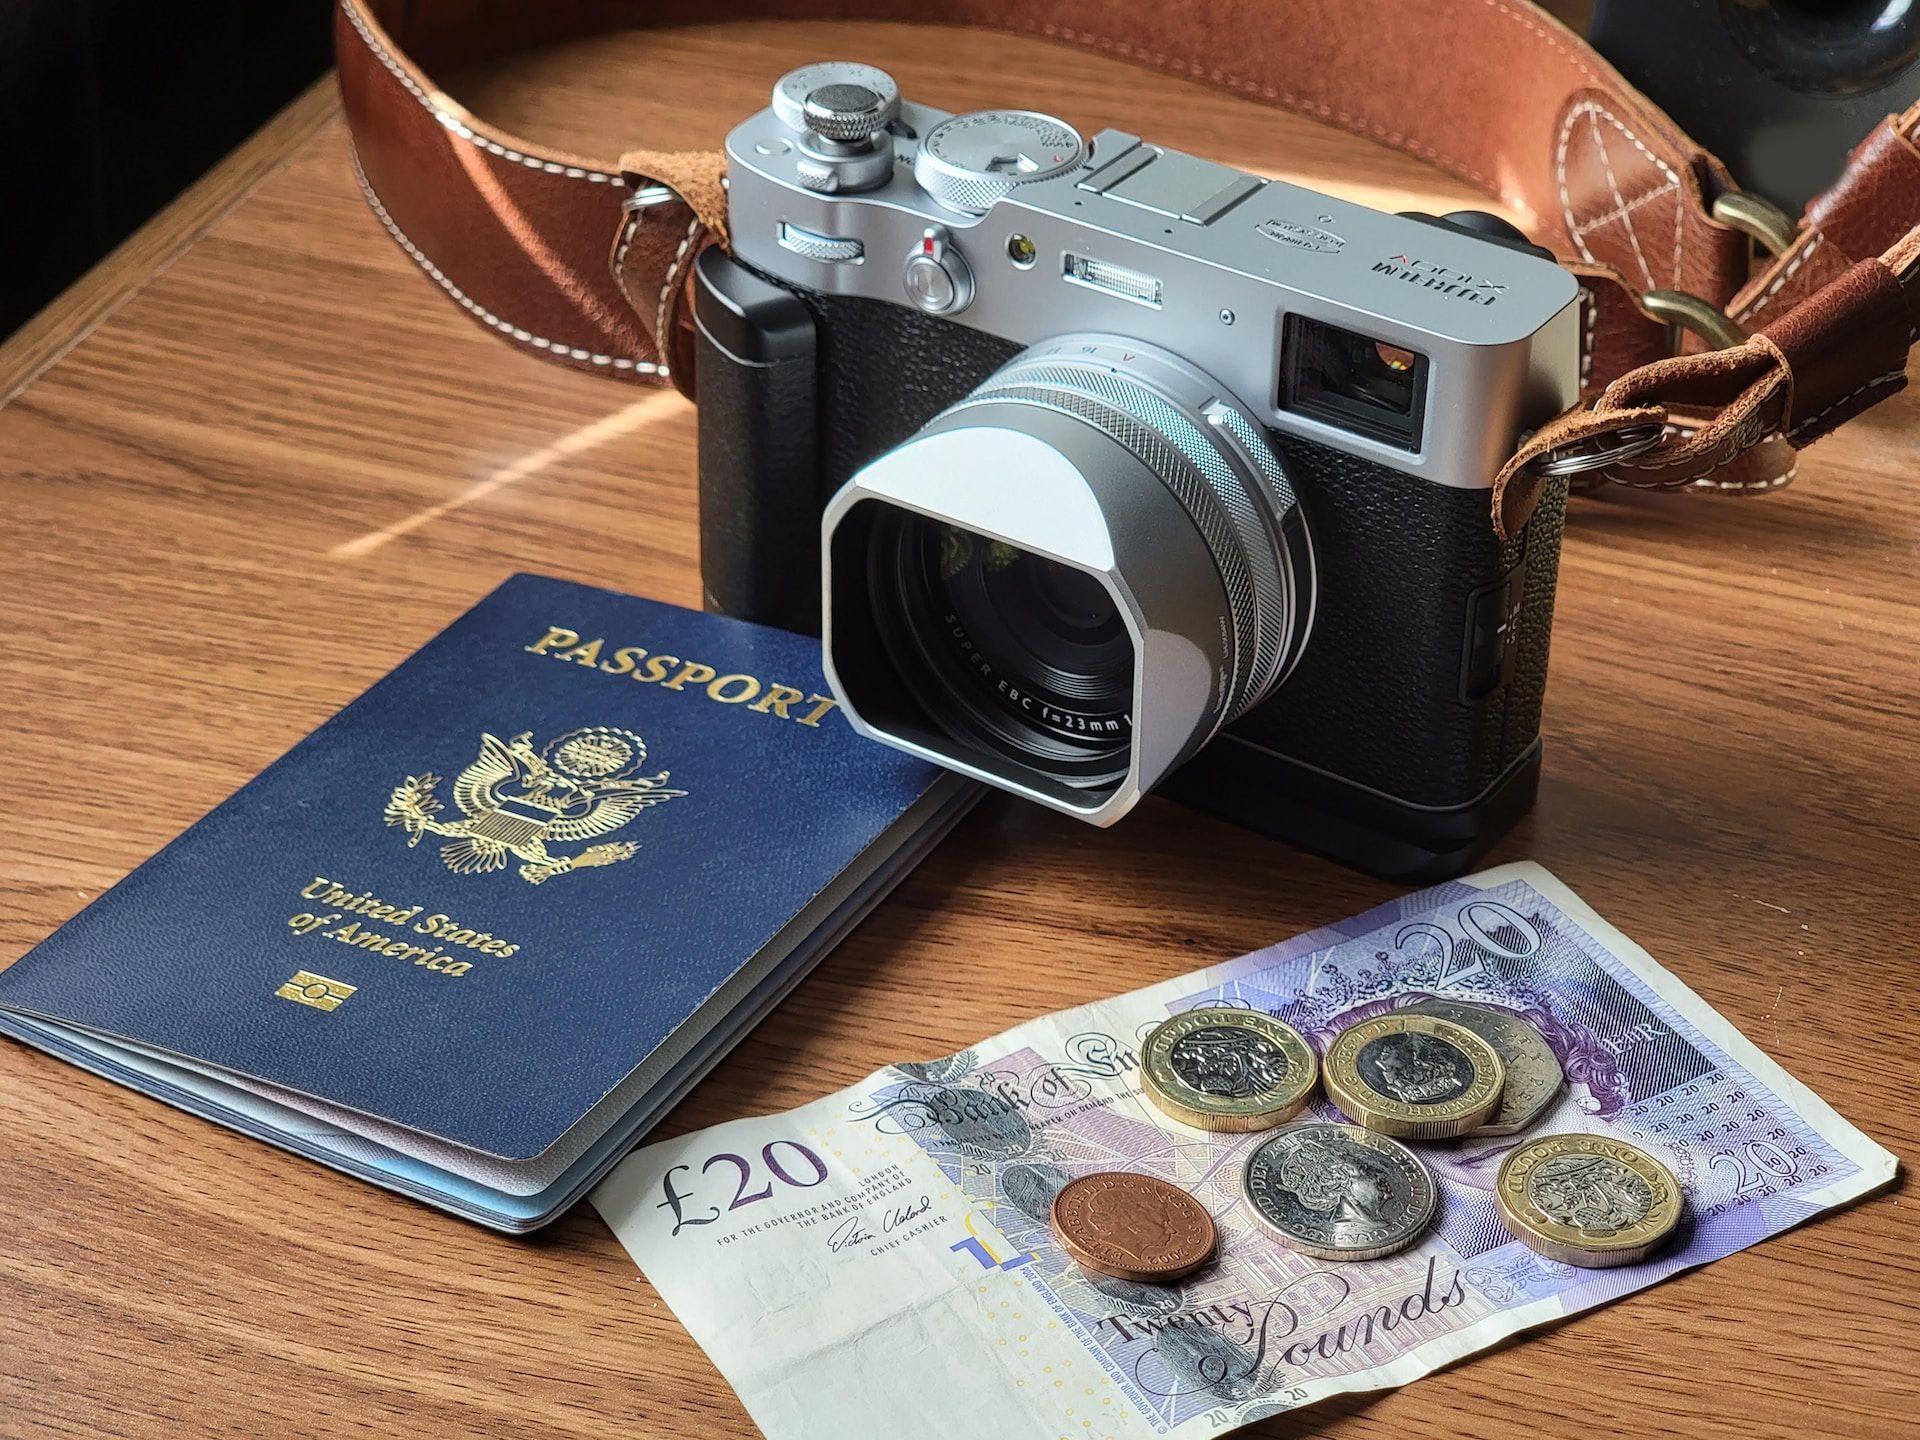 View of camera, passport, and cash 